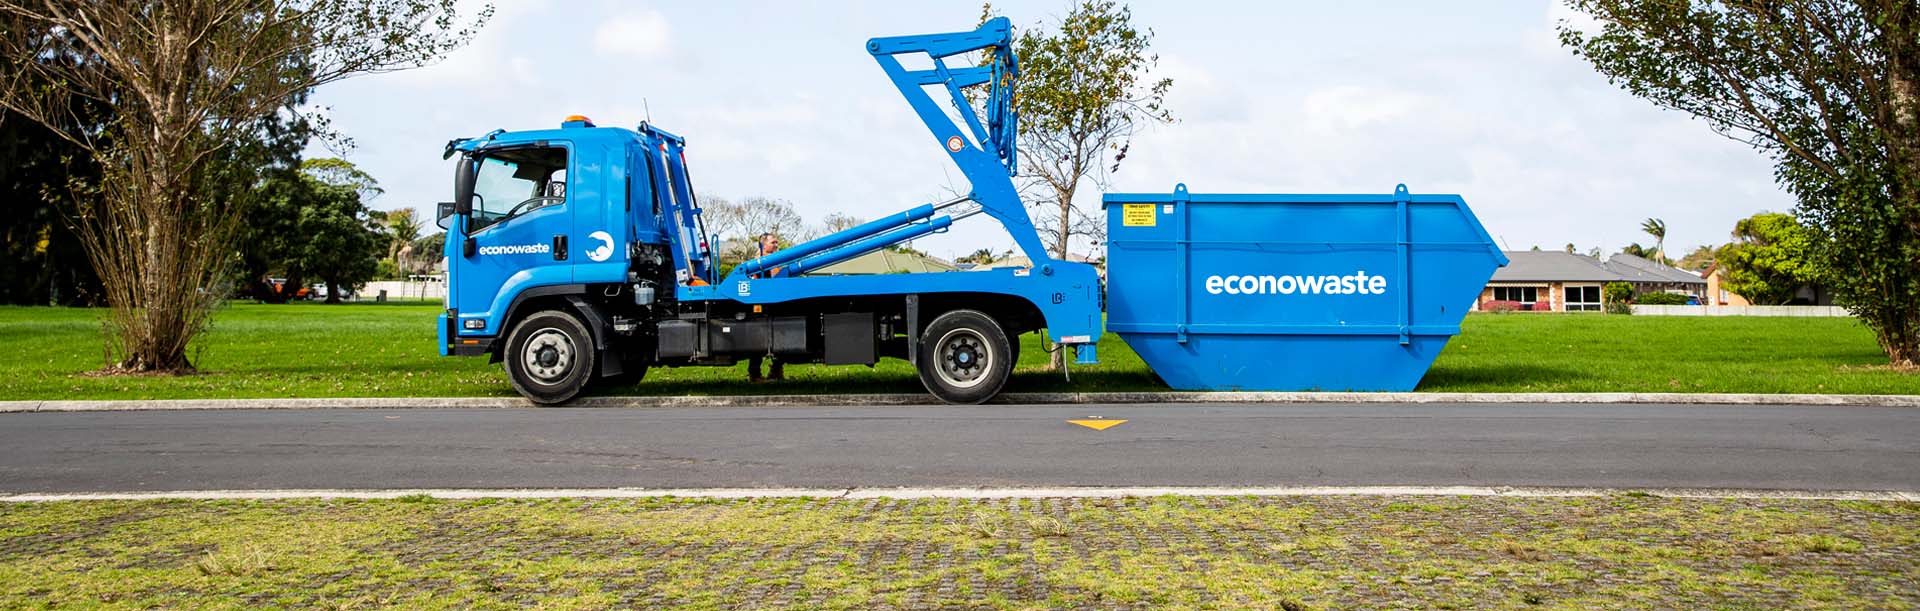 Econowaste skip bin and truck Auckland